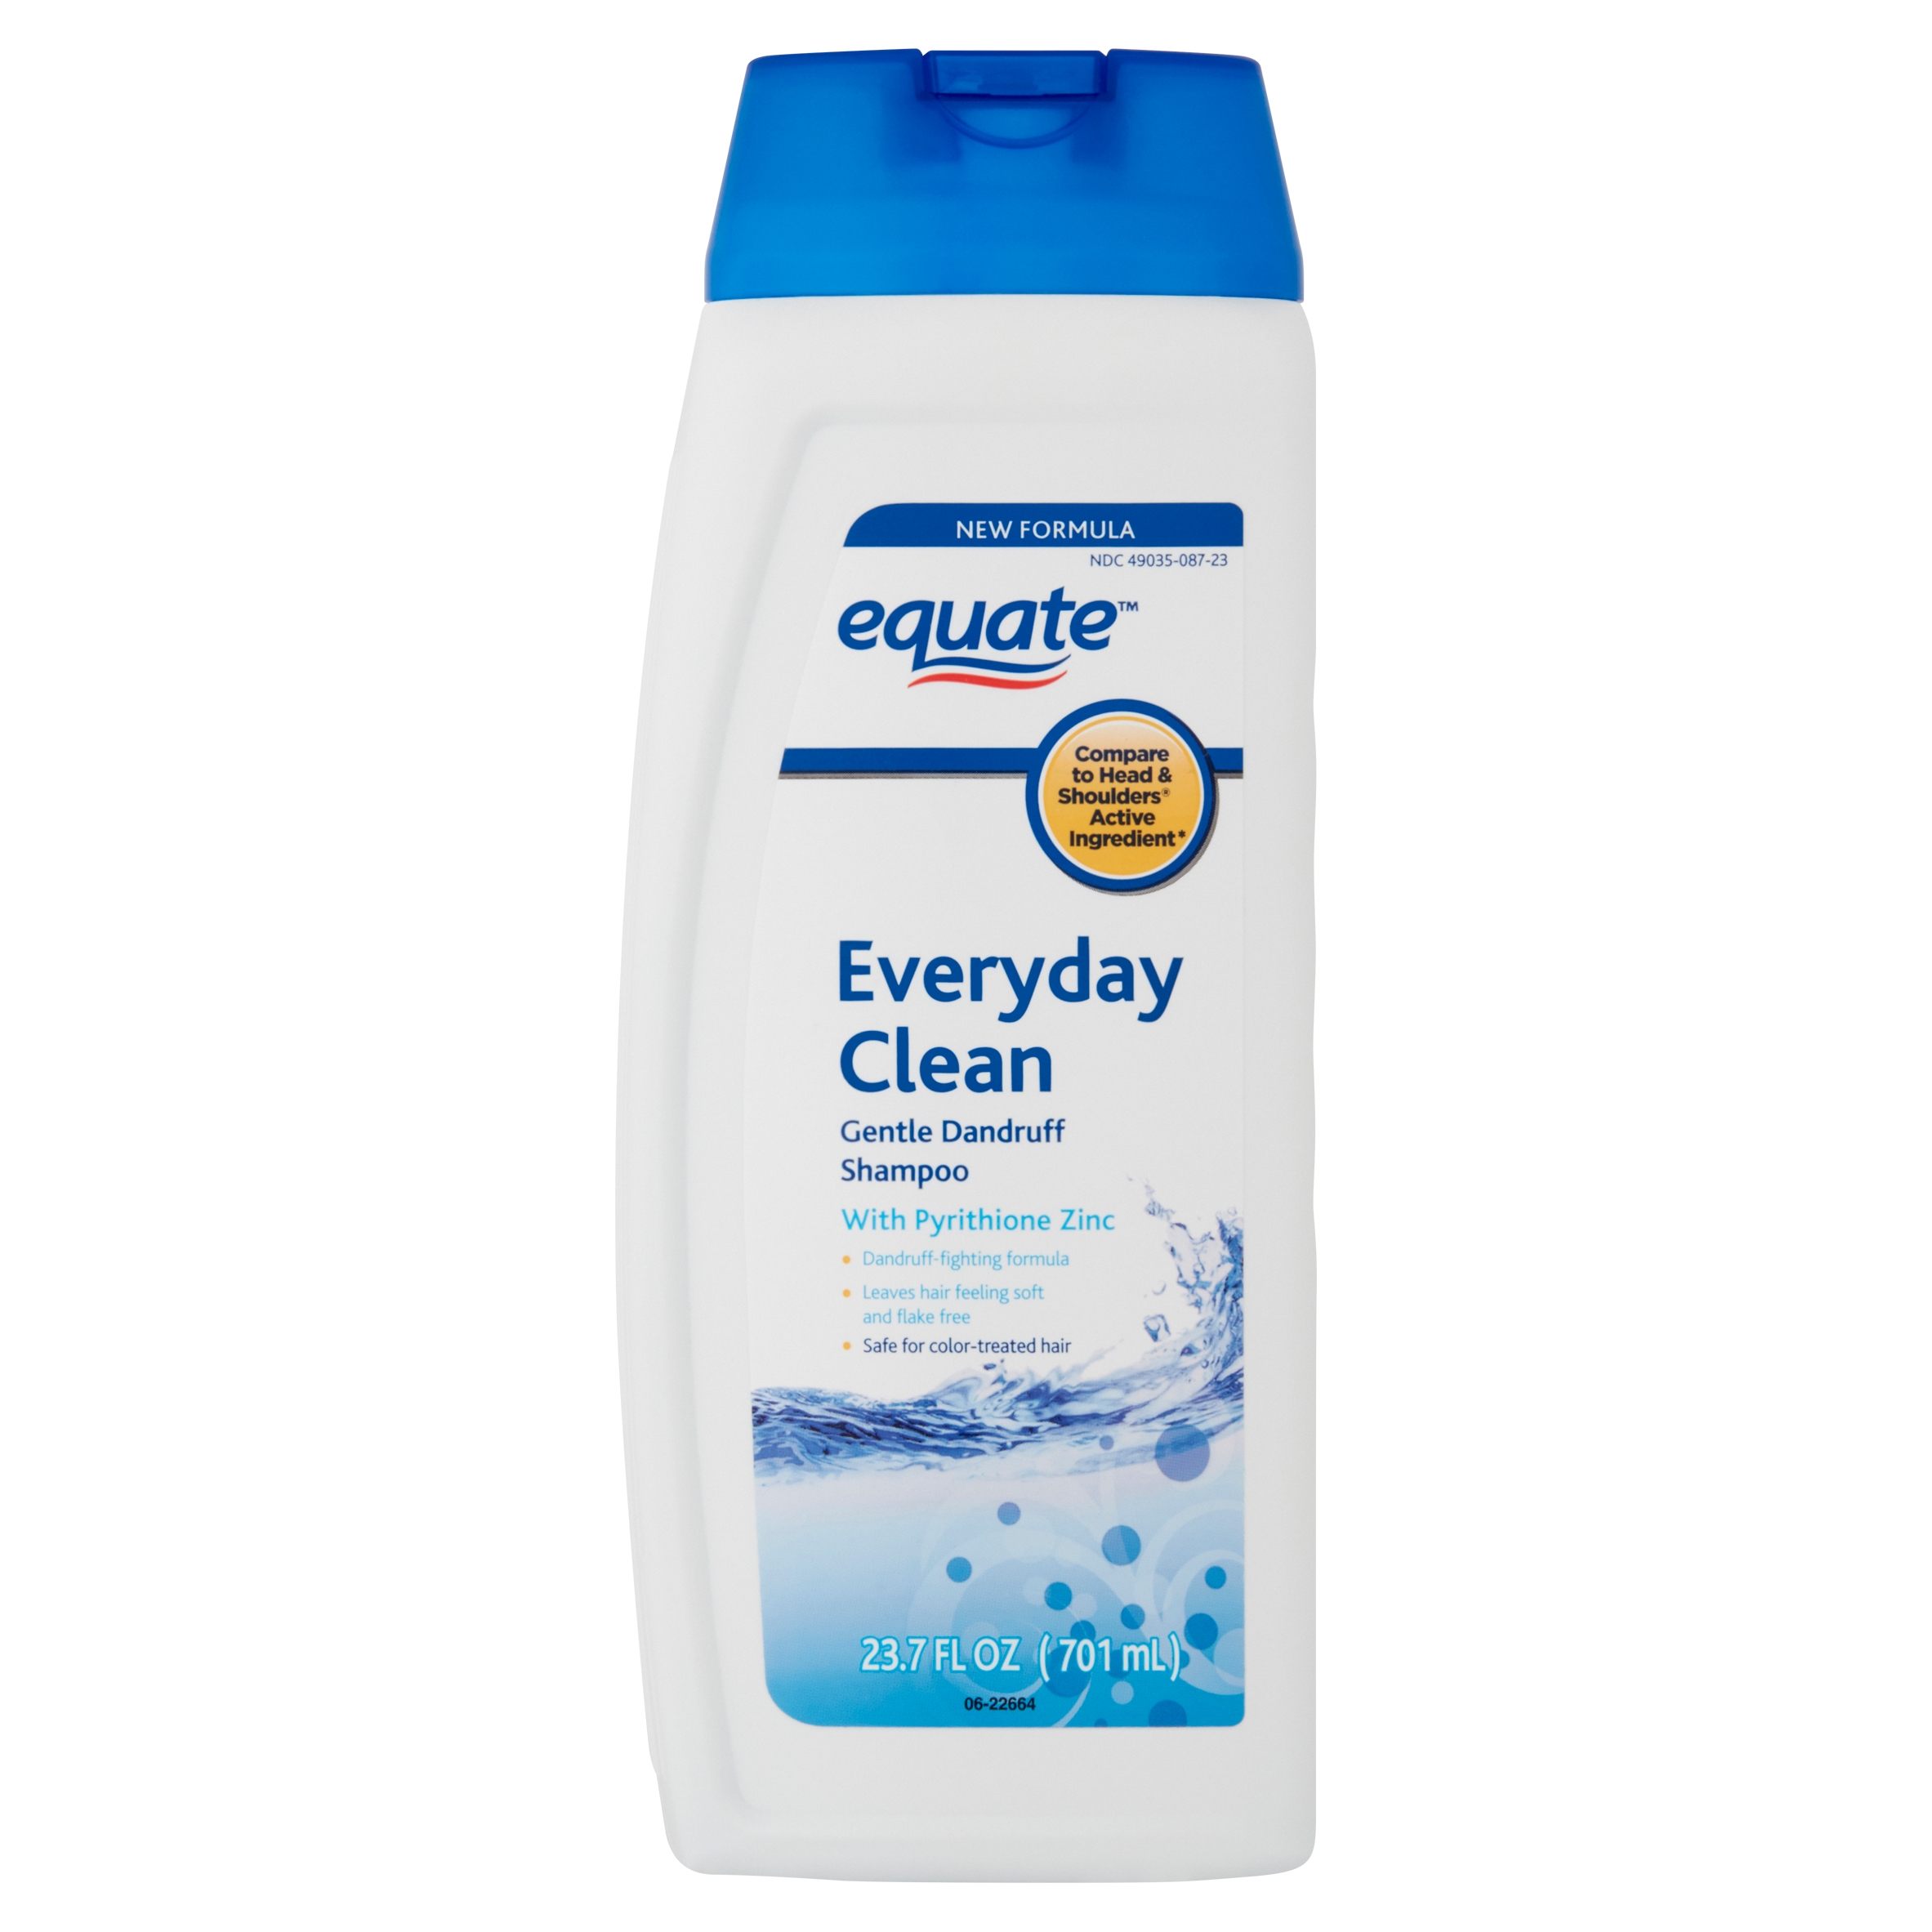 Equate Everyday Clean Gentle Dandruff Shampoo, 23.7 fl oz - image 3 of 9